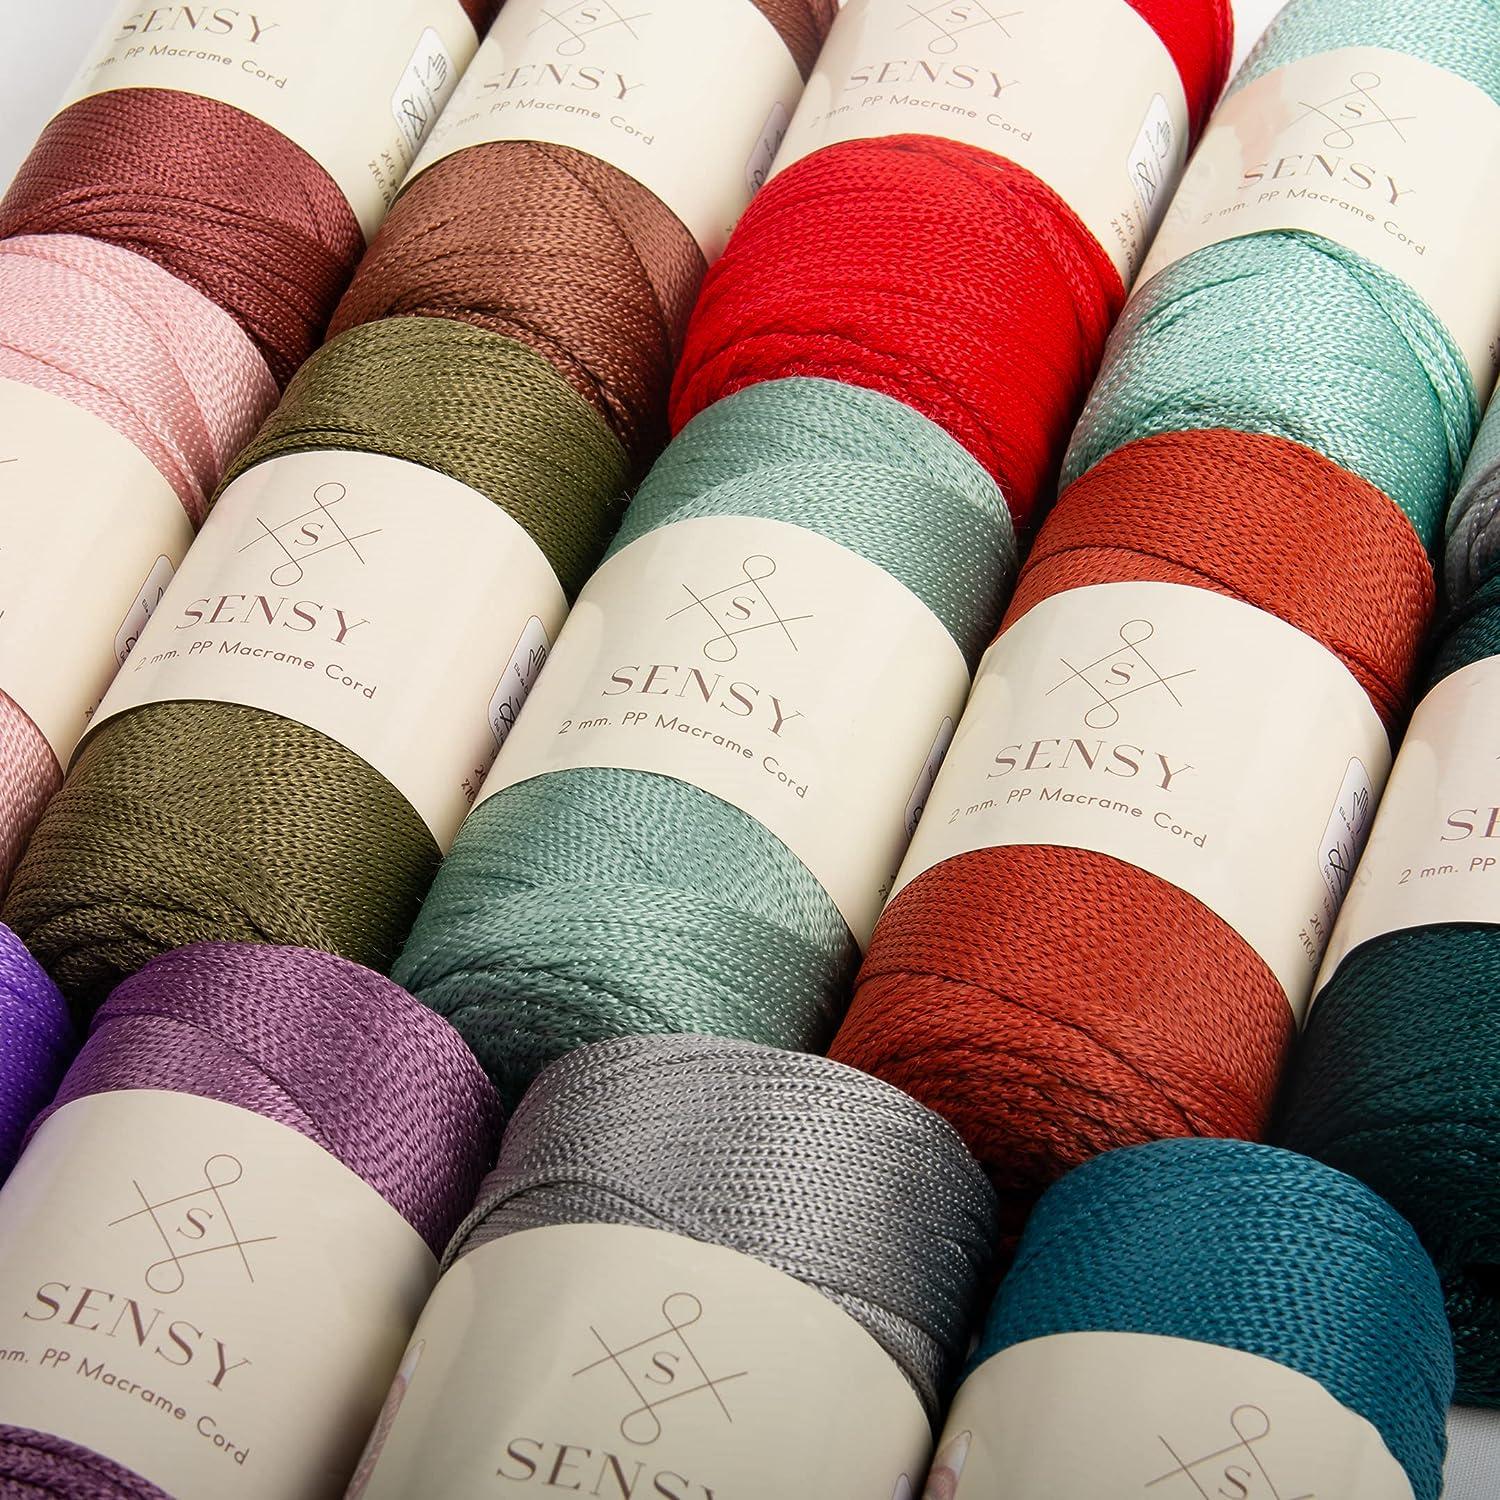 Sensy Premium 5mm 104 Yards Polyester Rope 100% Polypropylene Cord Macrame  Cord 5mm Crochet Bag Cord Macrame Rope Crochet Thread Gift for Knitter  (Pink) - Yahoo Shopping